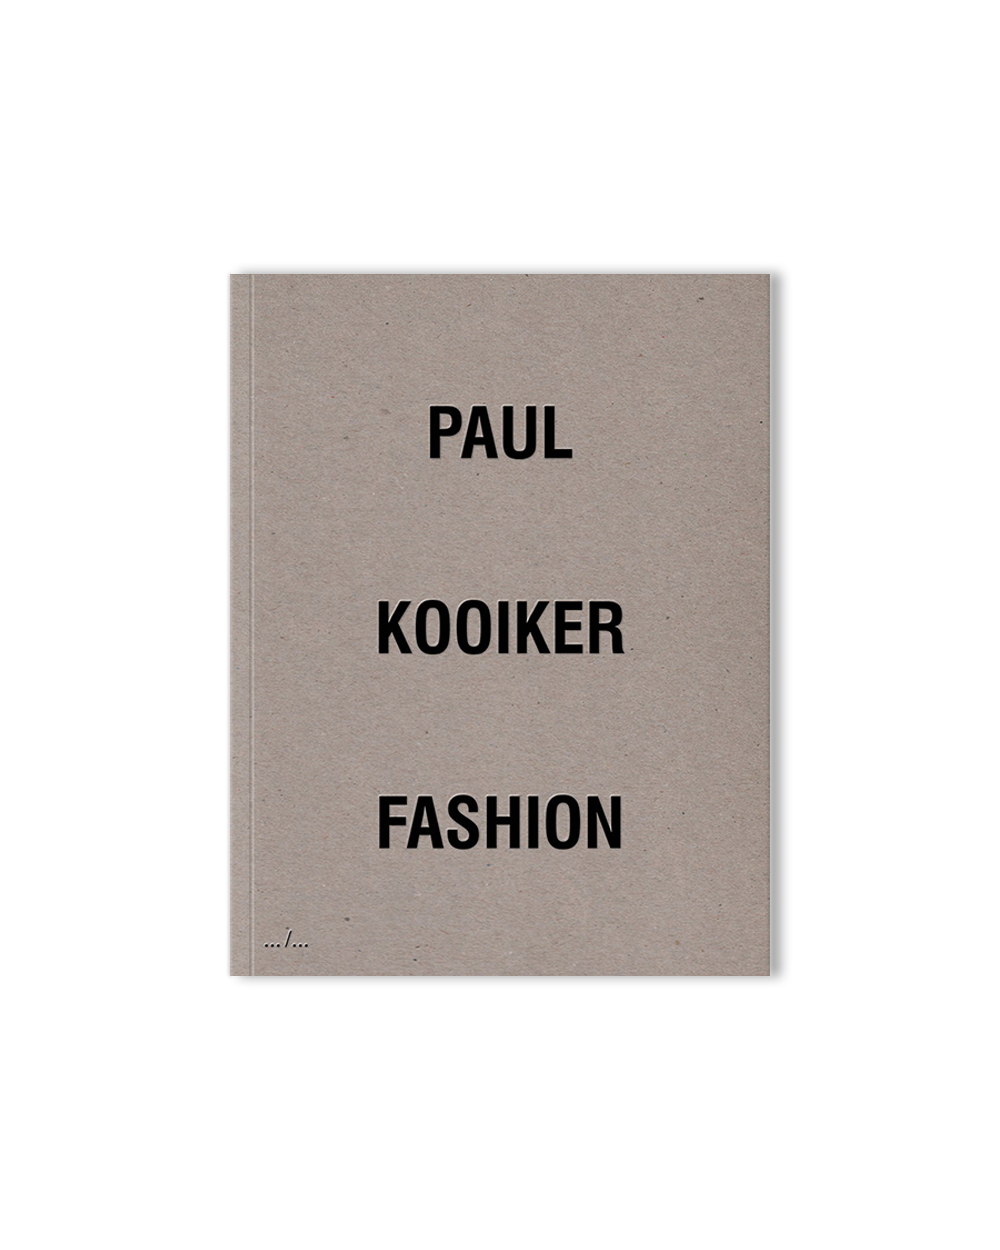 Paul Kooiker - Fashion